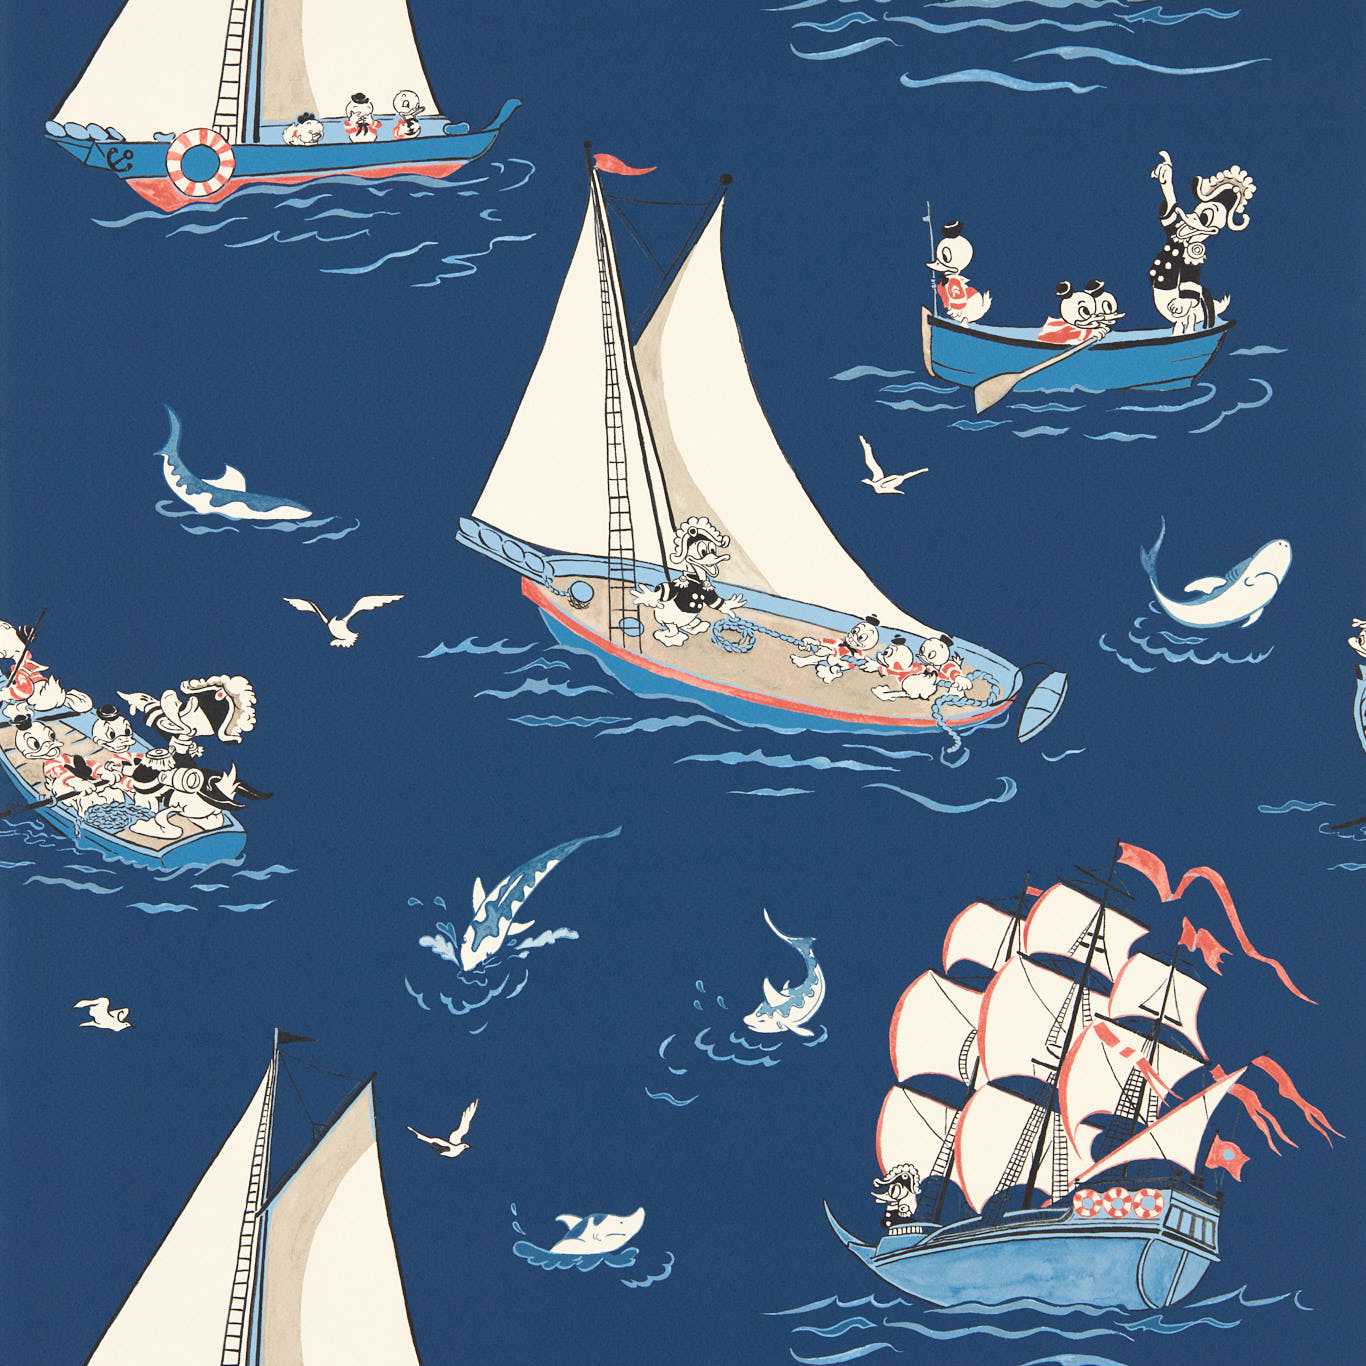 Donald Nautical Night Fishing Wallpaper DDIW217283 by Sanderson